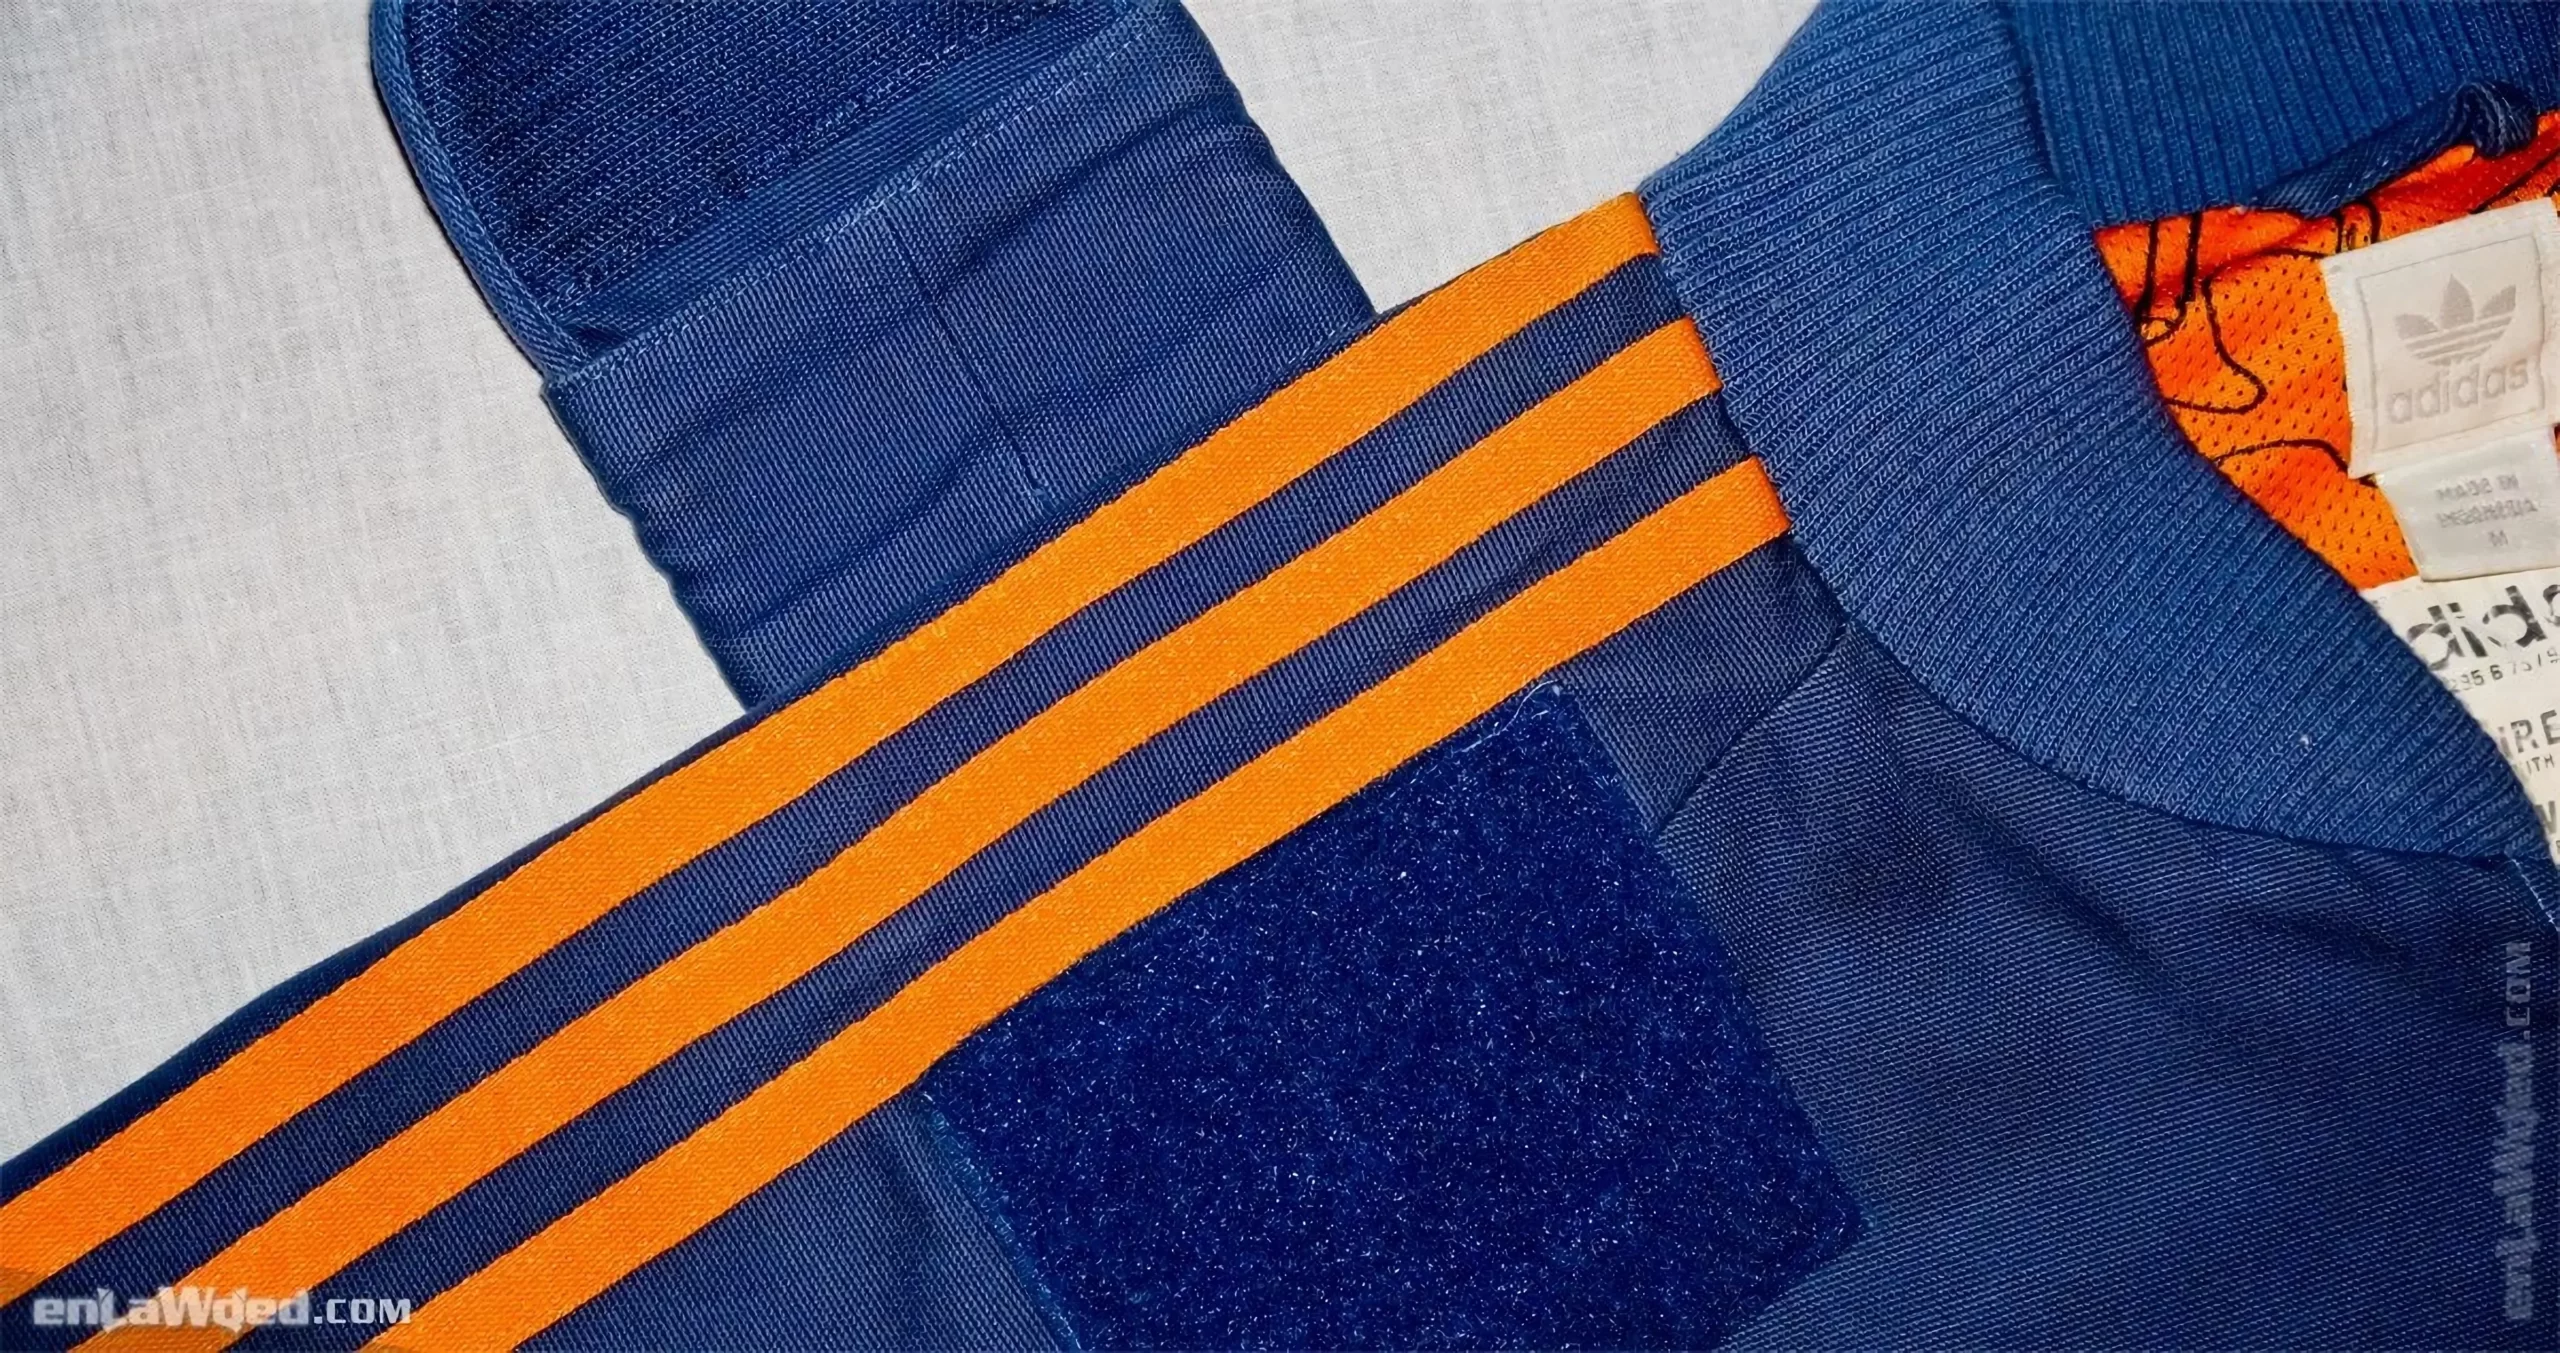 Men’s 2005 Adidas Originals Military Peace Jacket: Unstoppable (EnLawded.com file #lmchb7vzakcwc0m0xer)